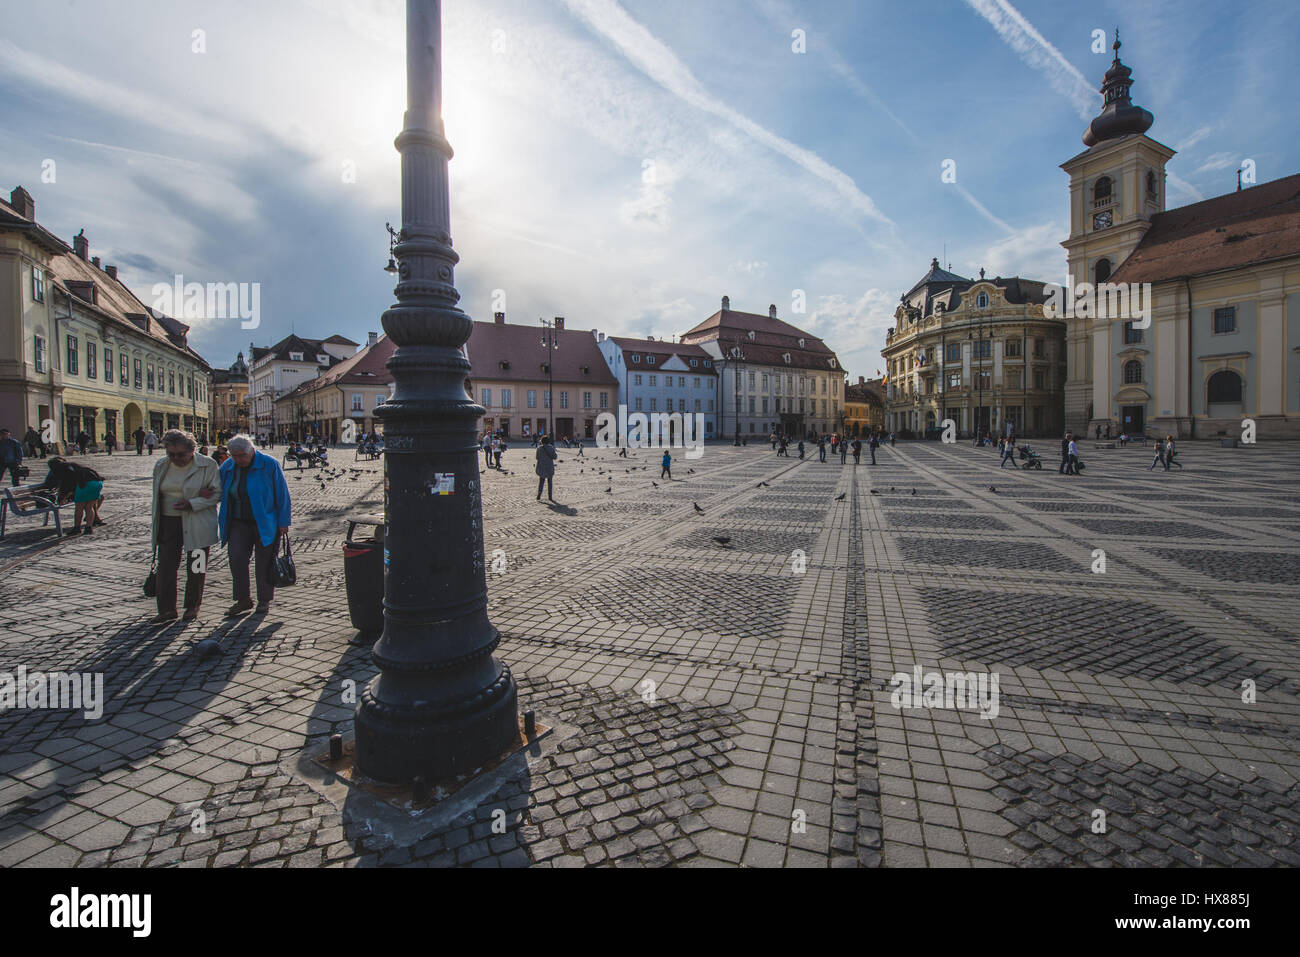 March, 2017: the romanian city of Sibiu Photo: Cronos/Alessandro Bosio Stock Photo